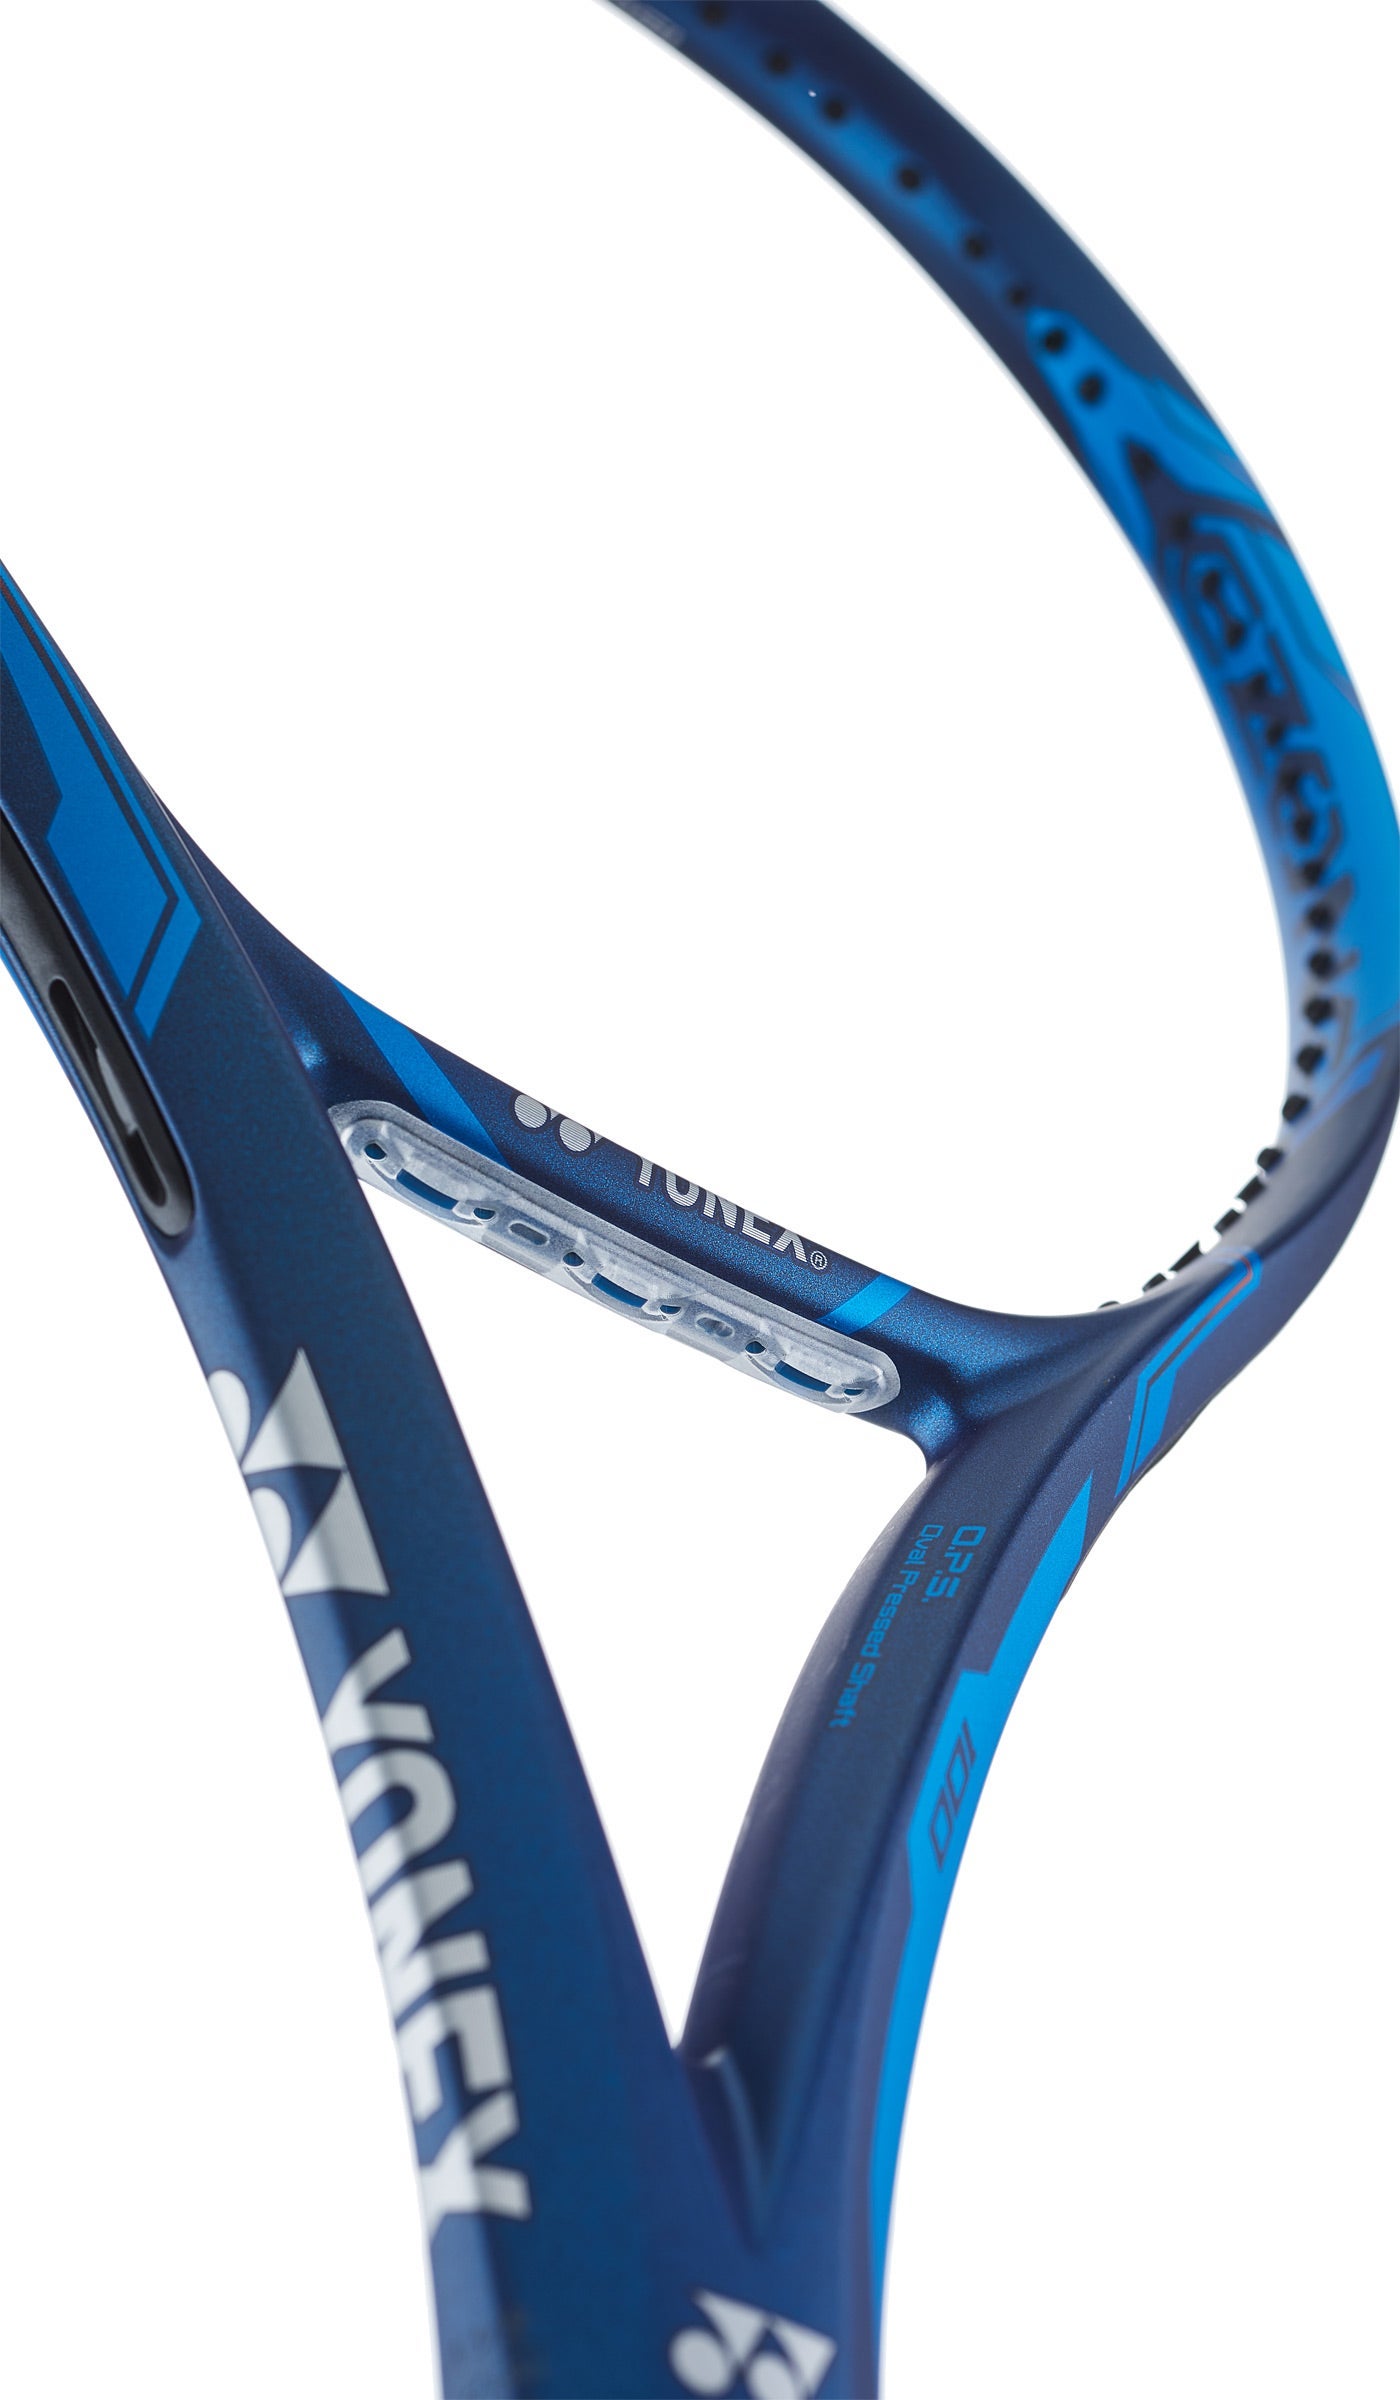 300 grams Blue.Brand new 100% Original Tennis Racket Yonex Ezone DR 100 Grip-3 